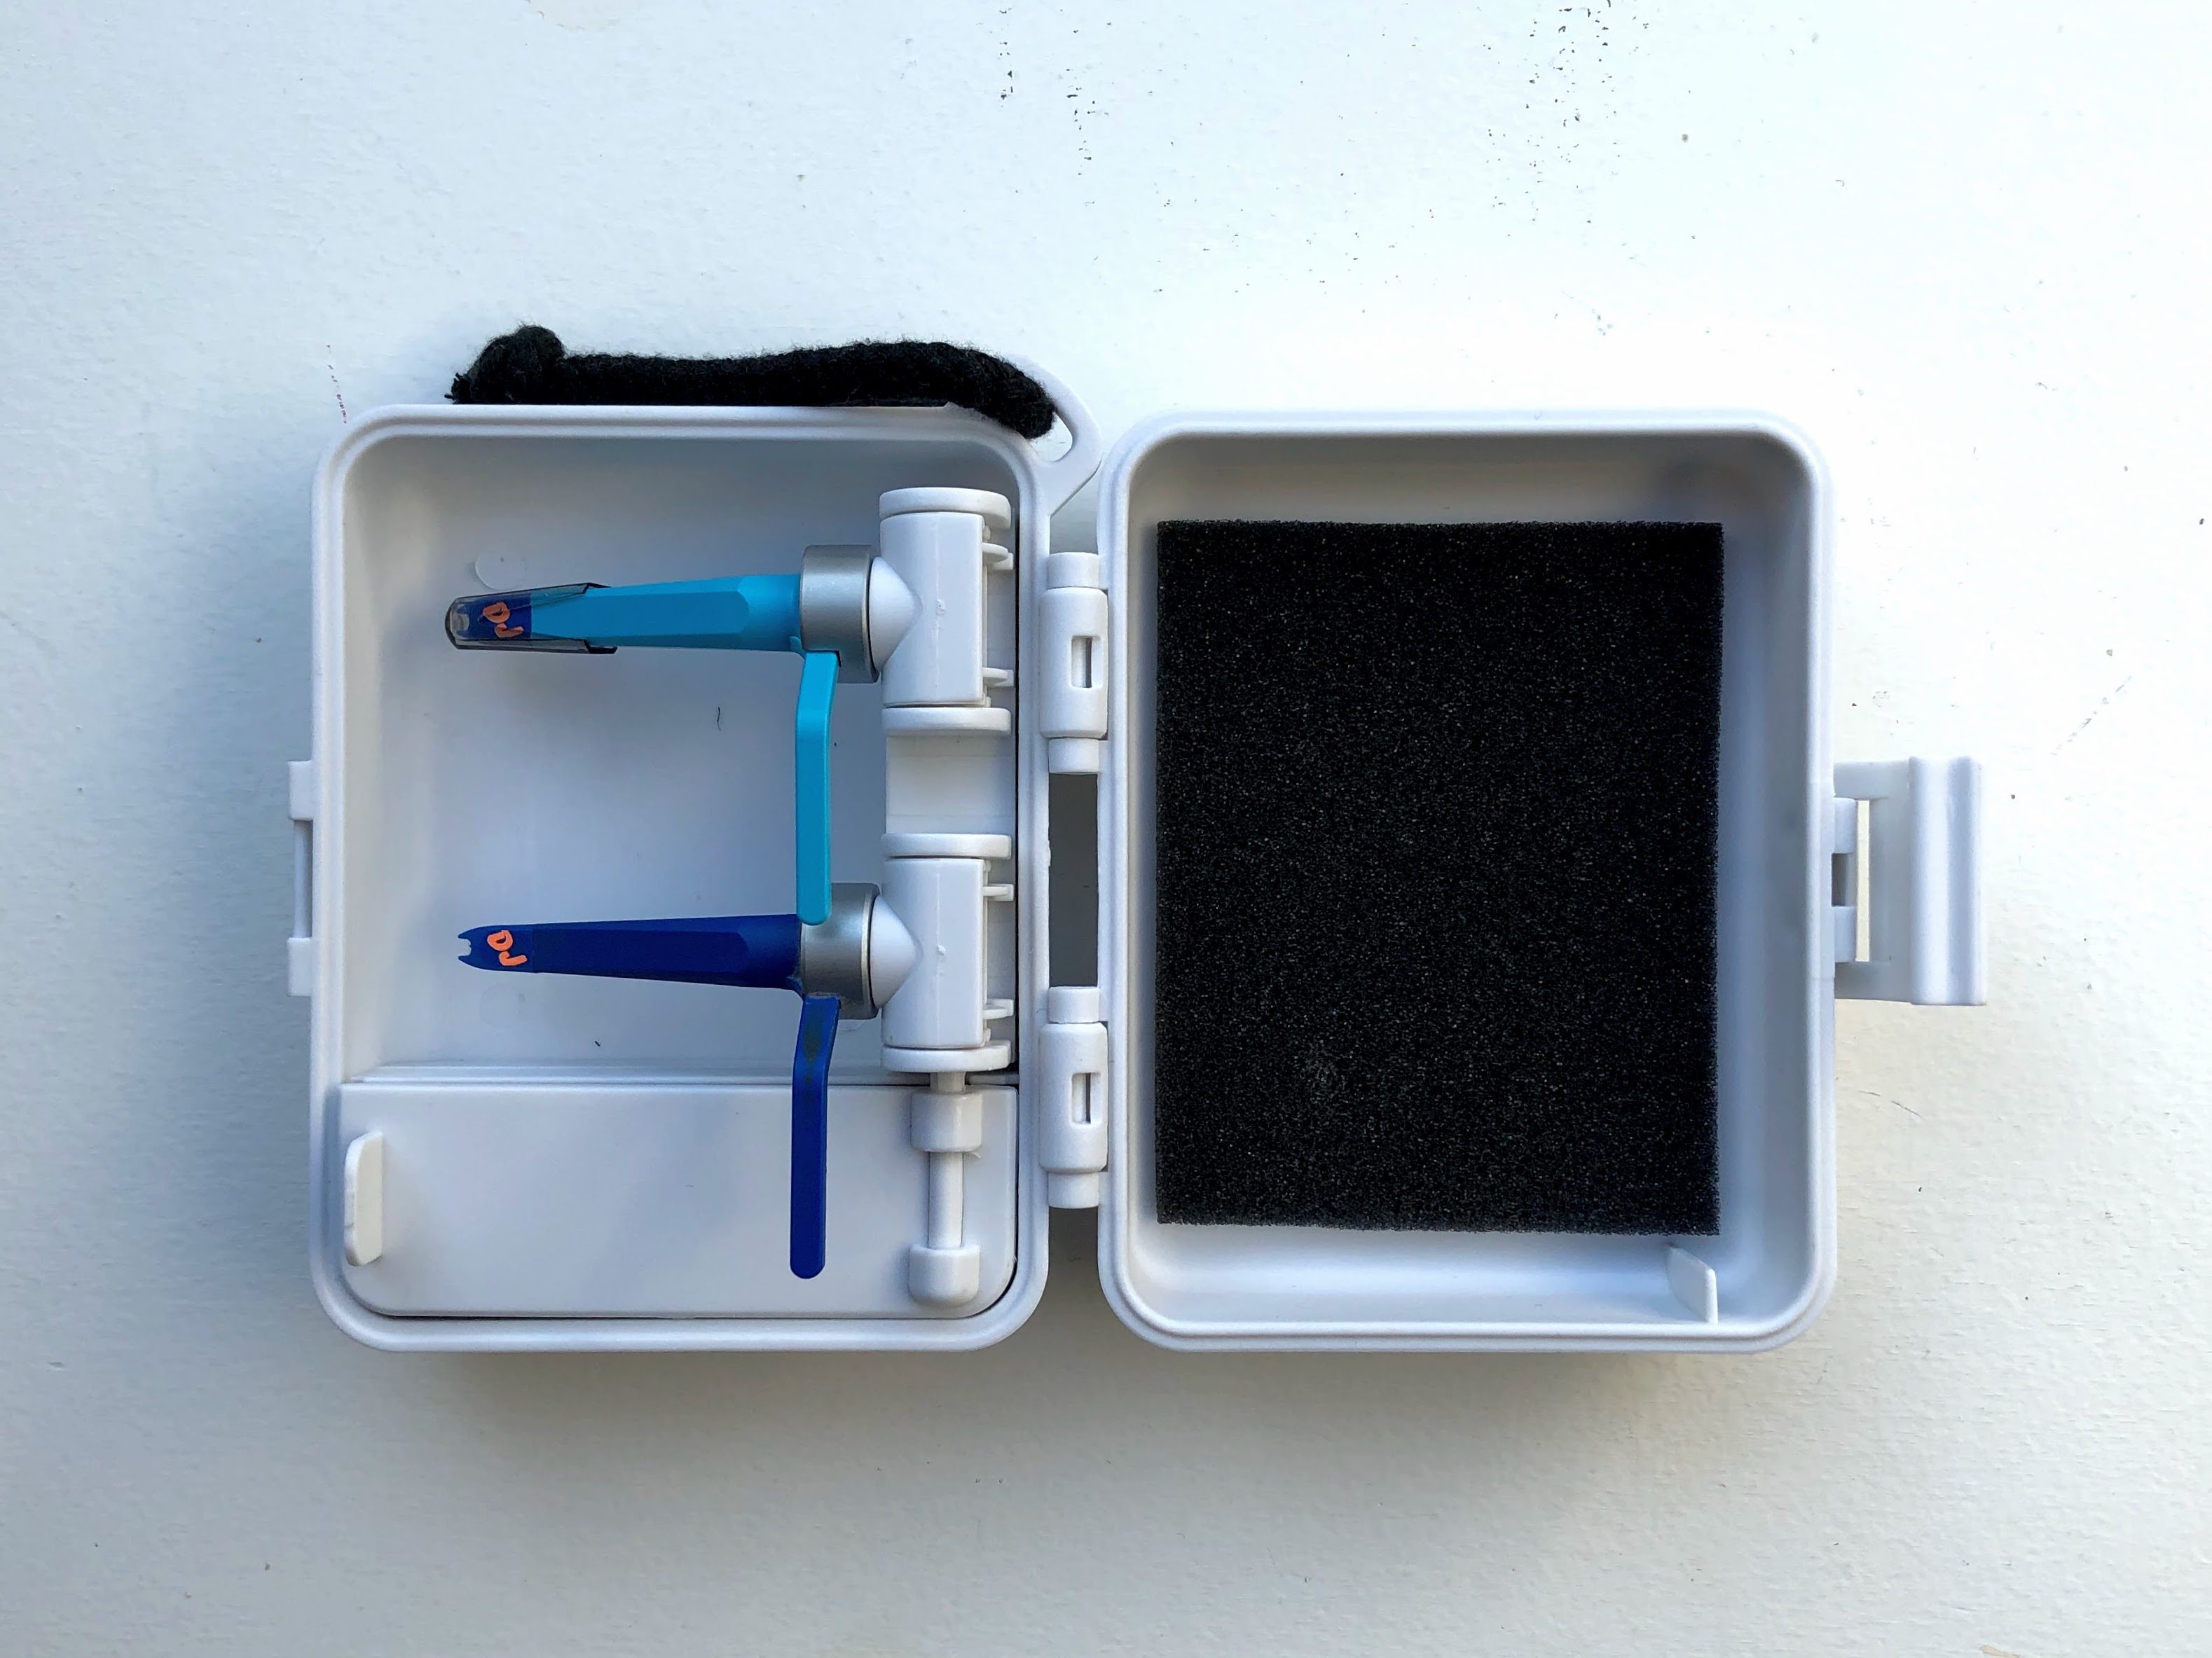 Stokyo Black Box Cartridge Case mit Ortofon Systemen